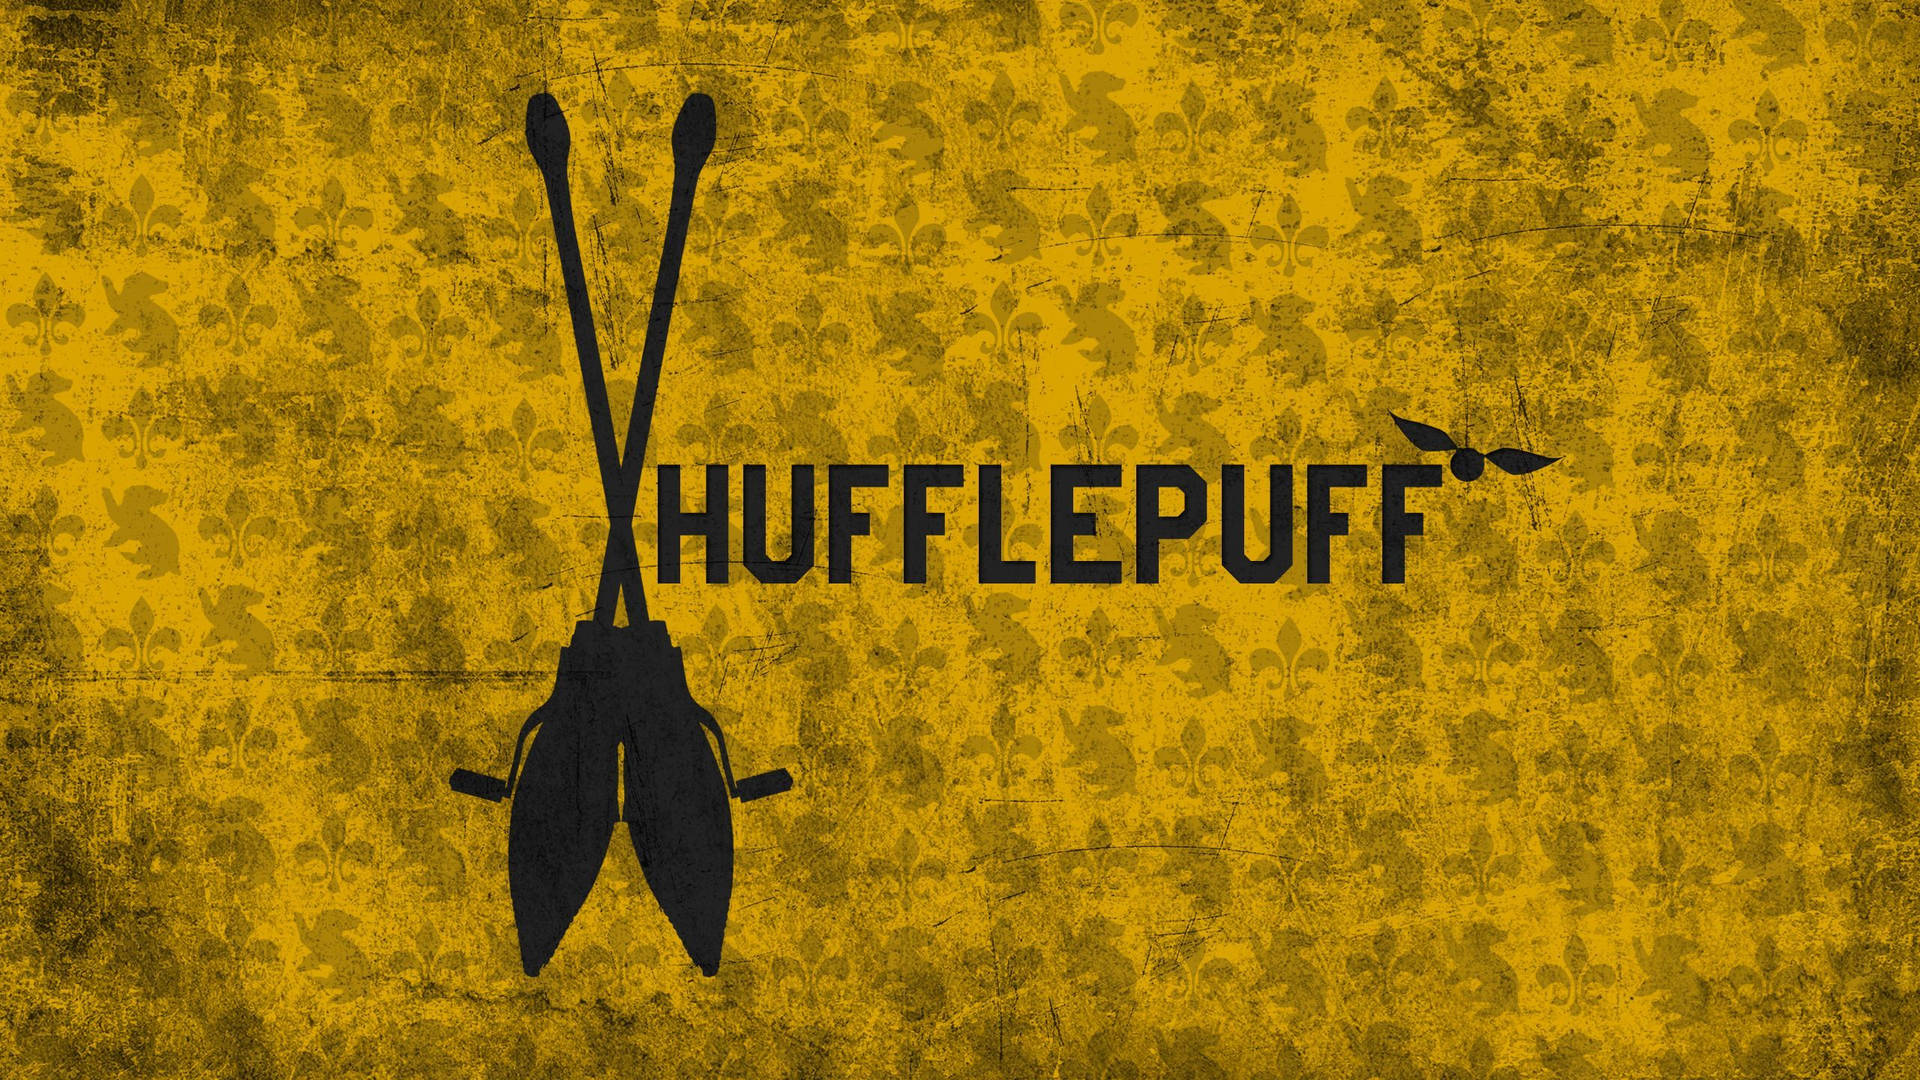 Hufflepuff Broomsticks Against a Dark Background Wallpaper